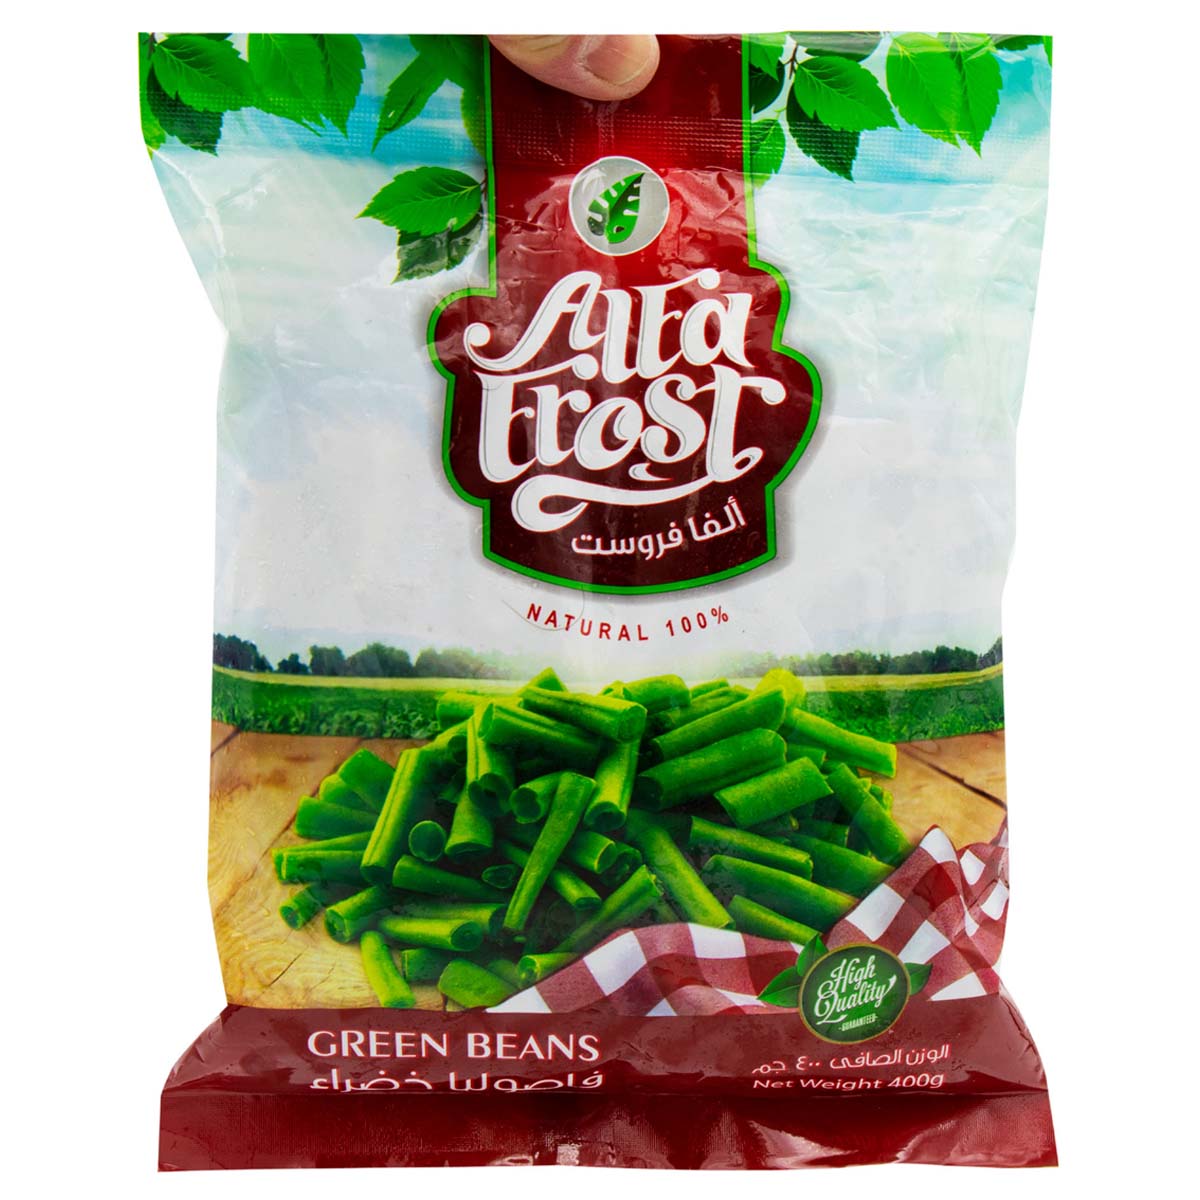 Alfa Frost - Frozen Green Beans - 400g - Continental Food Store